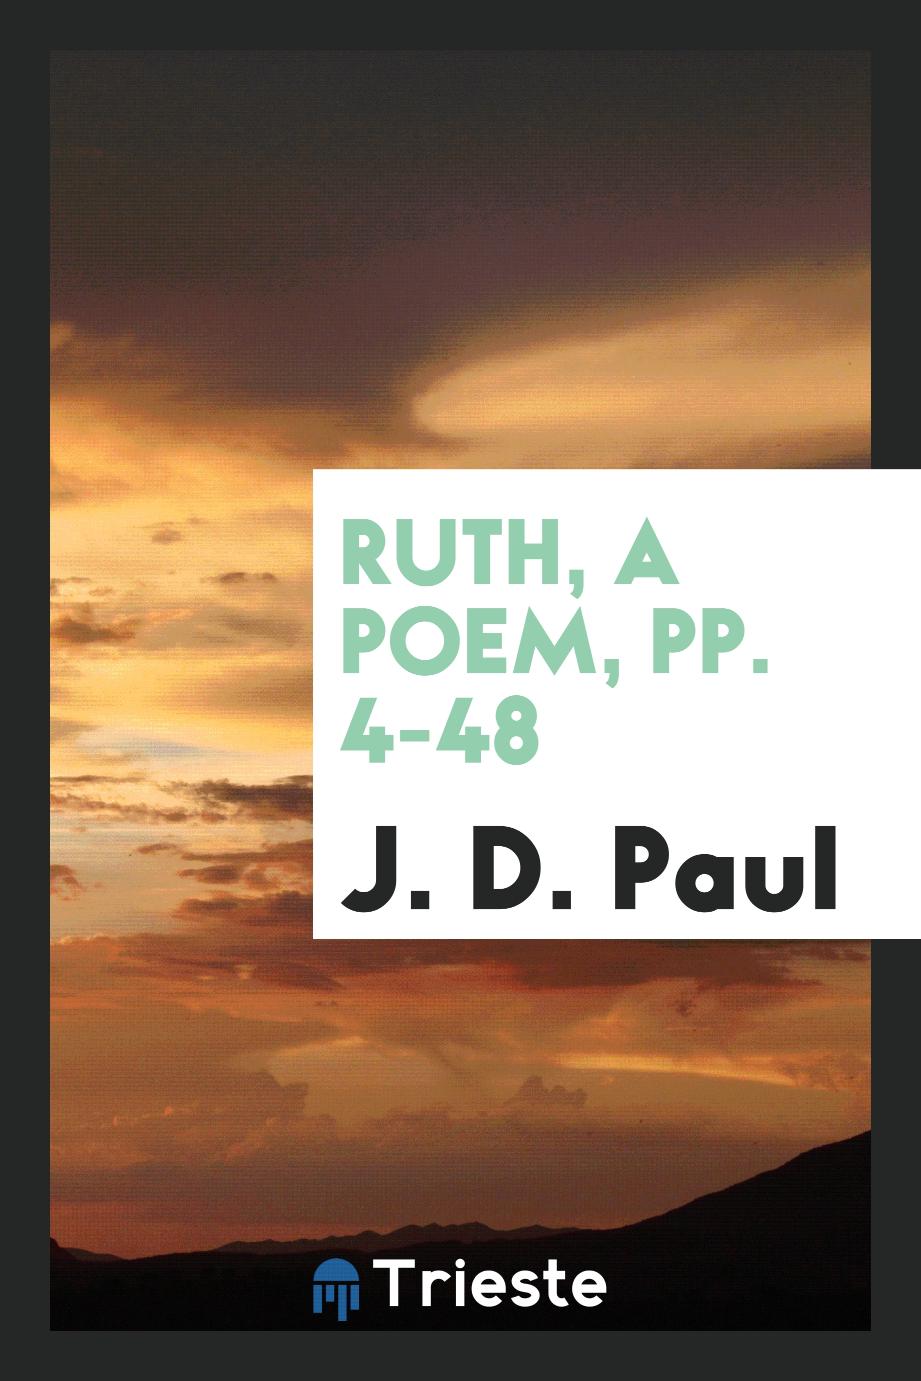 Ruth, a poem, pp. 4-48